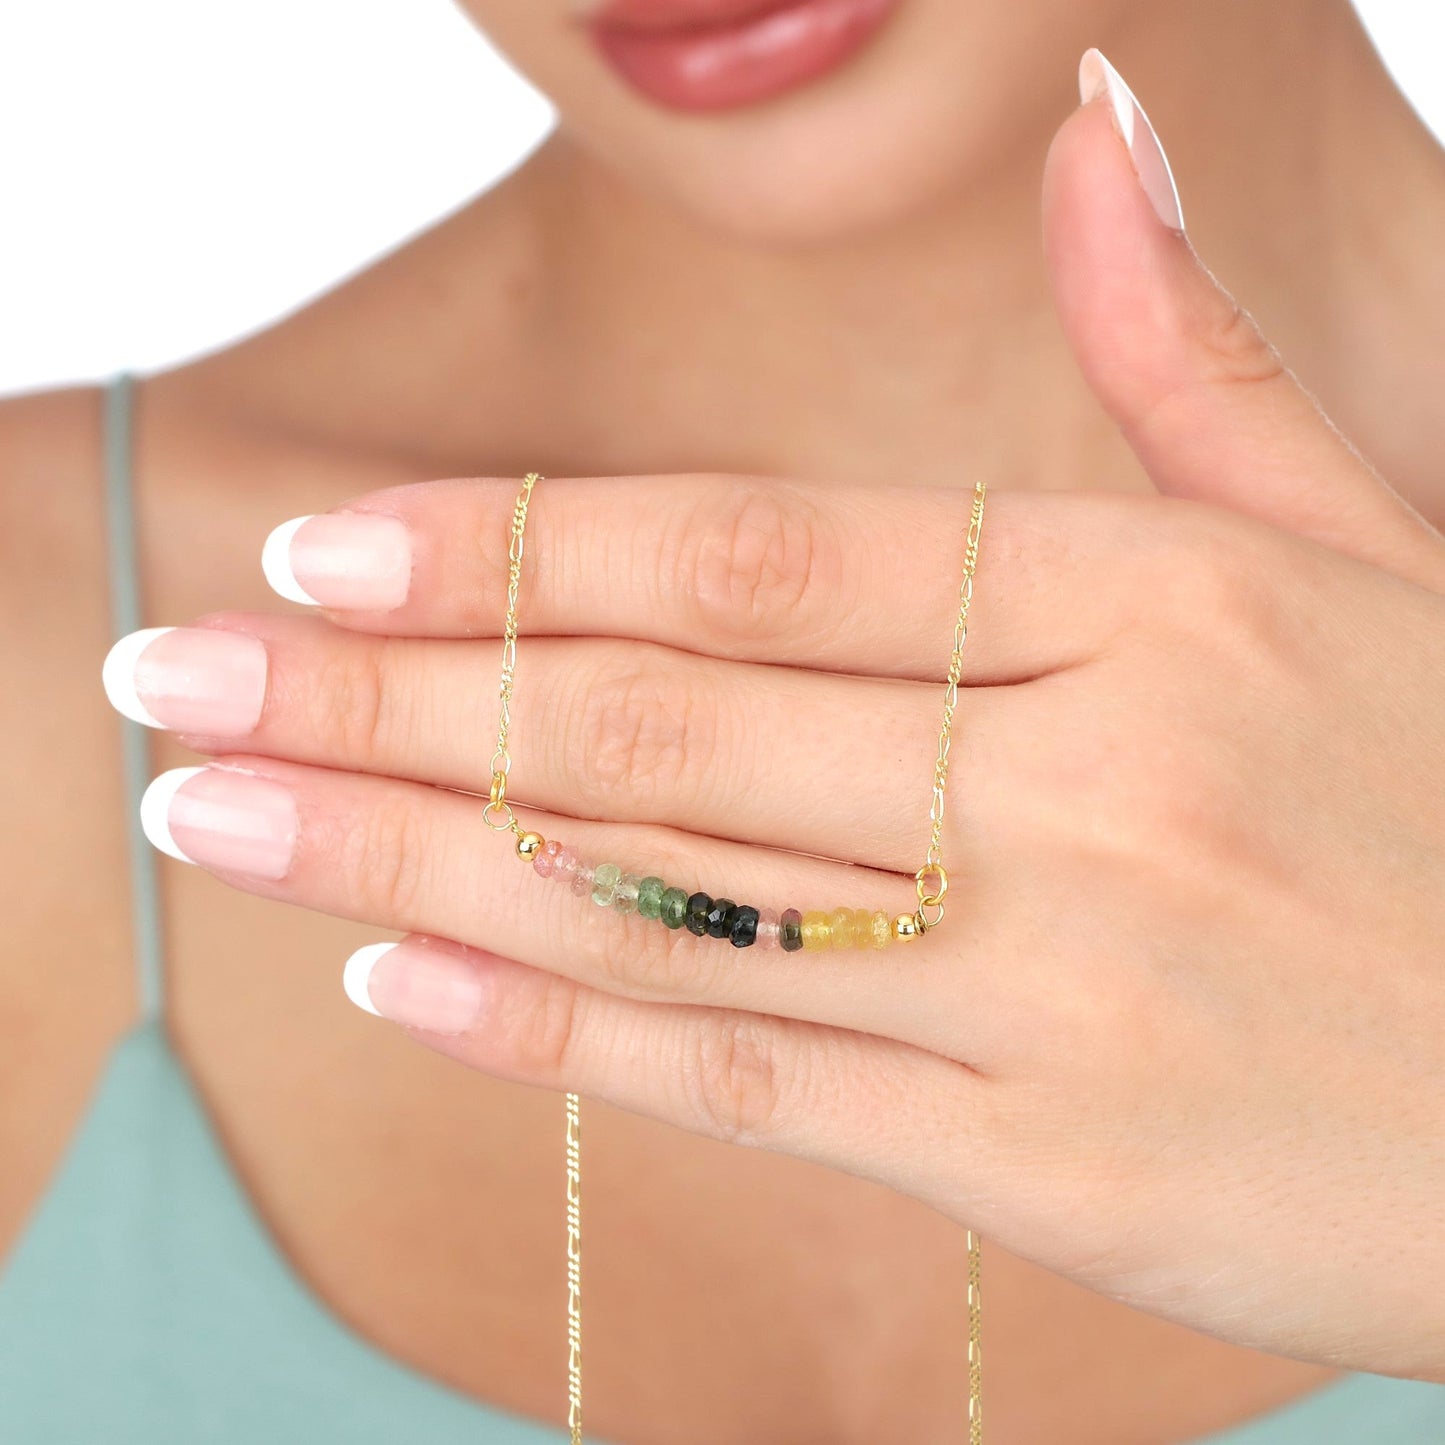 Tourmaline Gemstone Staff Necklace - 925 Sterling Gold Gilded Colorful Gemstone Rondelle Chain - K925-85